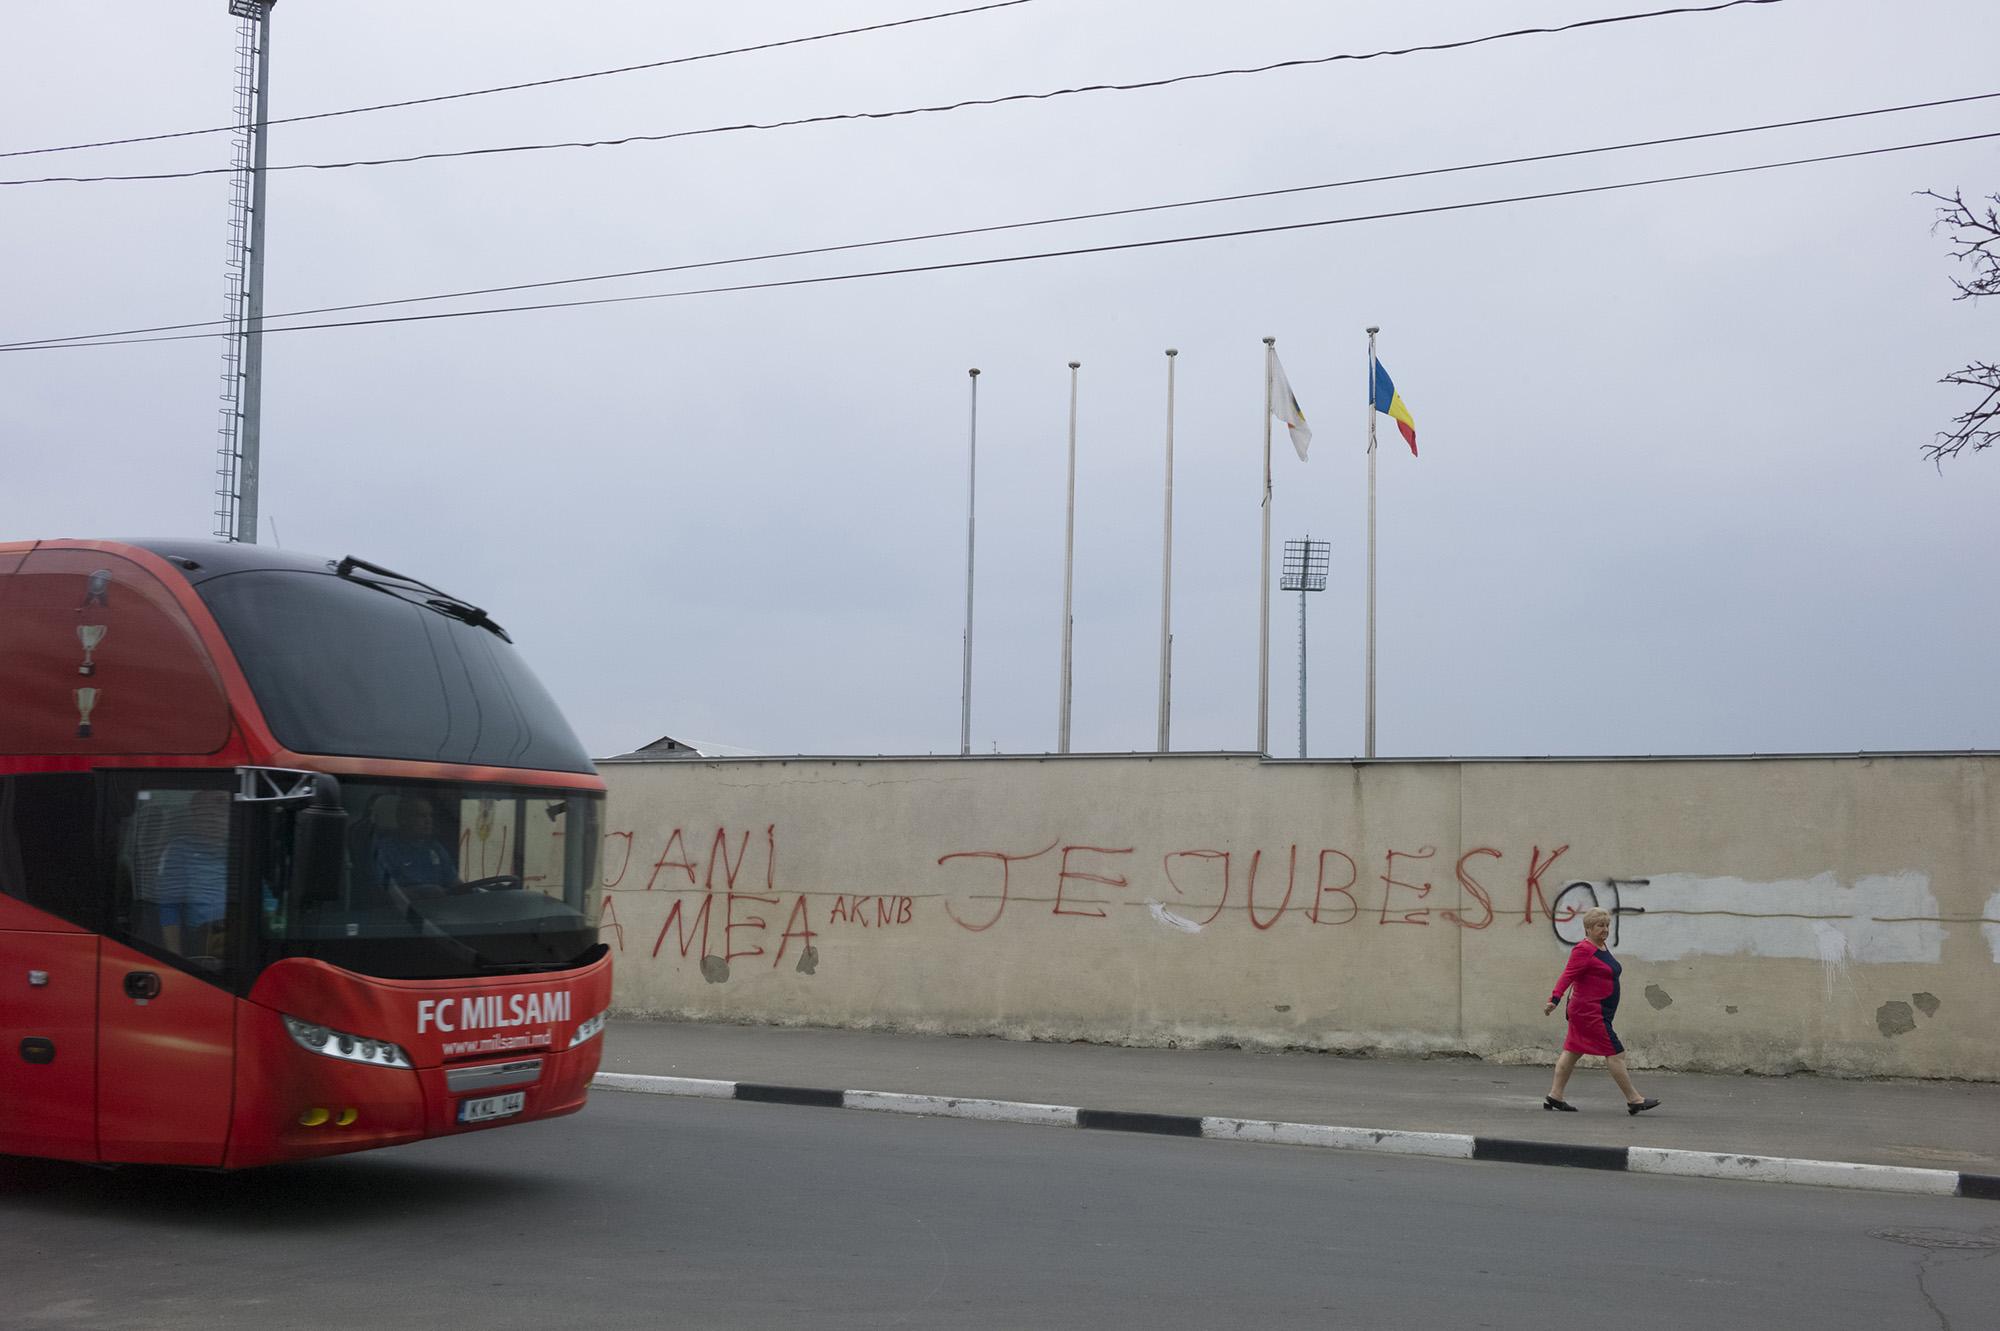 Republic of Moldova / Orhei / FC Milsami Orhei - FC Zimbru Chisinau. The red bus of the FC...